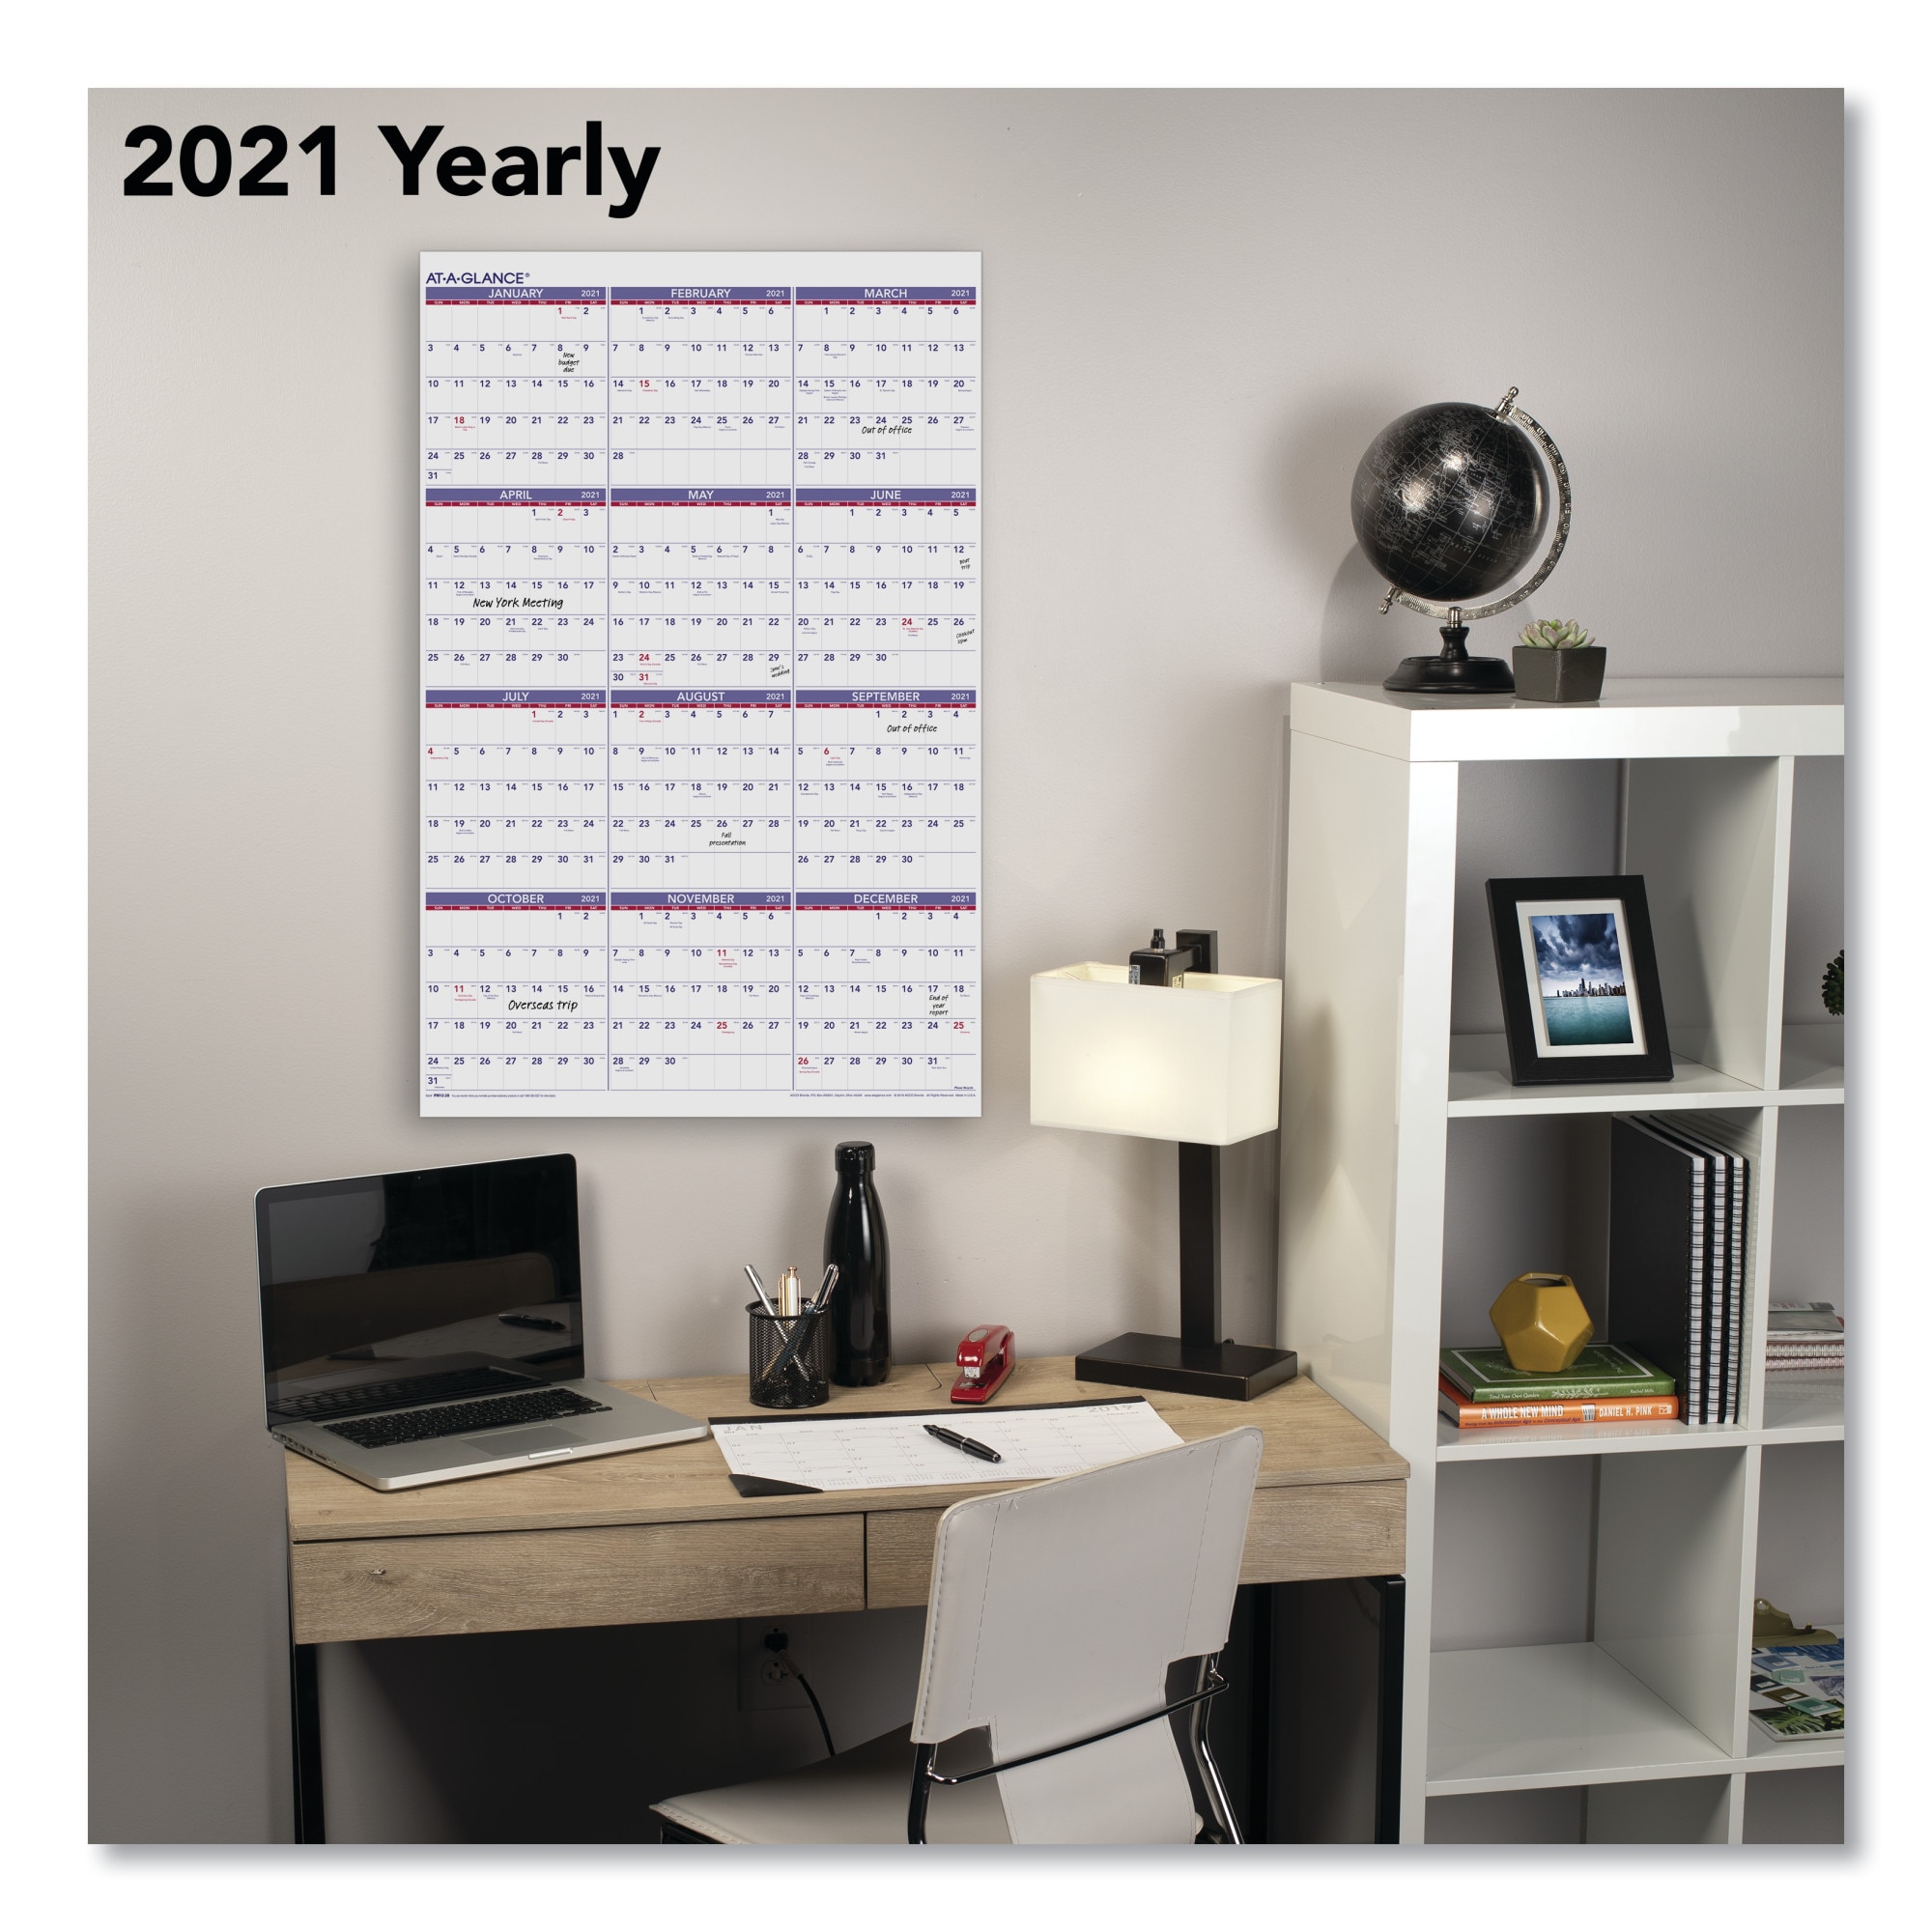 ATAGLANCE Yearly Wall Calendar, 24 x 36, WhiteSheet, 12month (jan